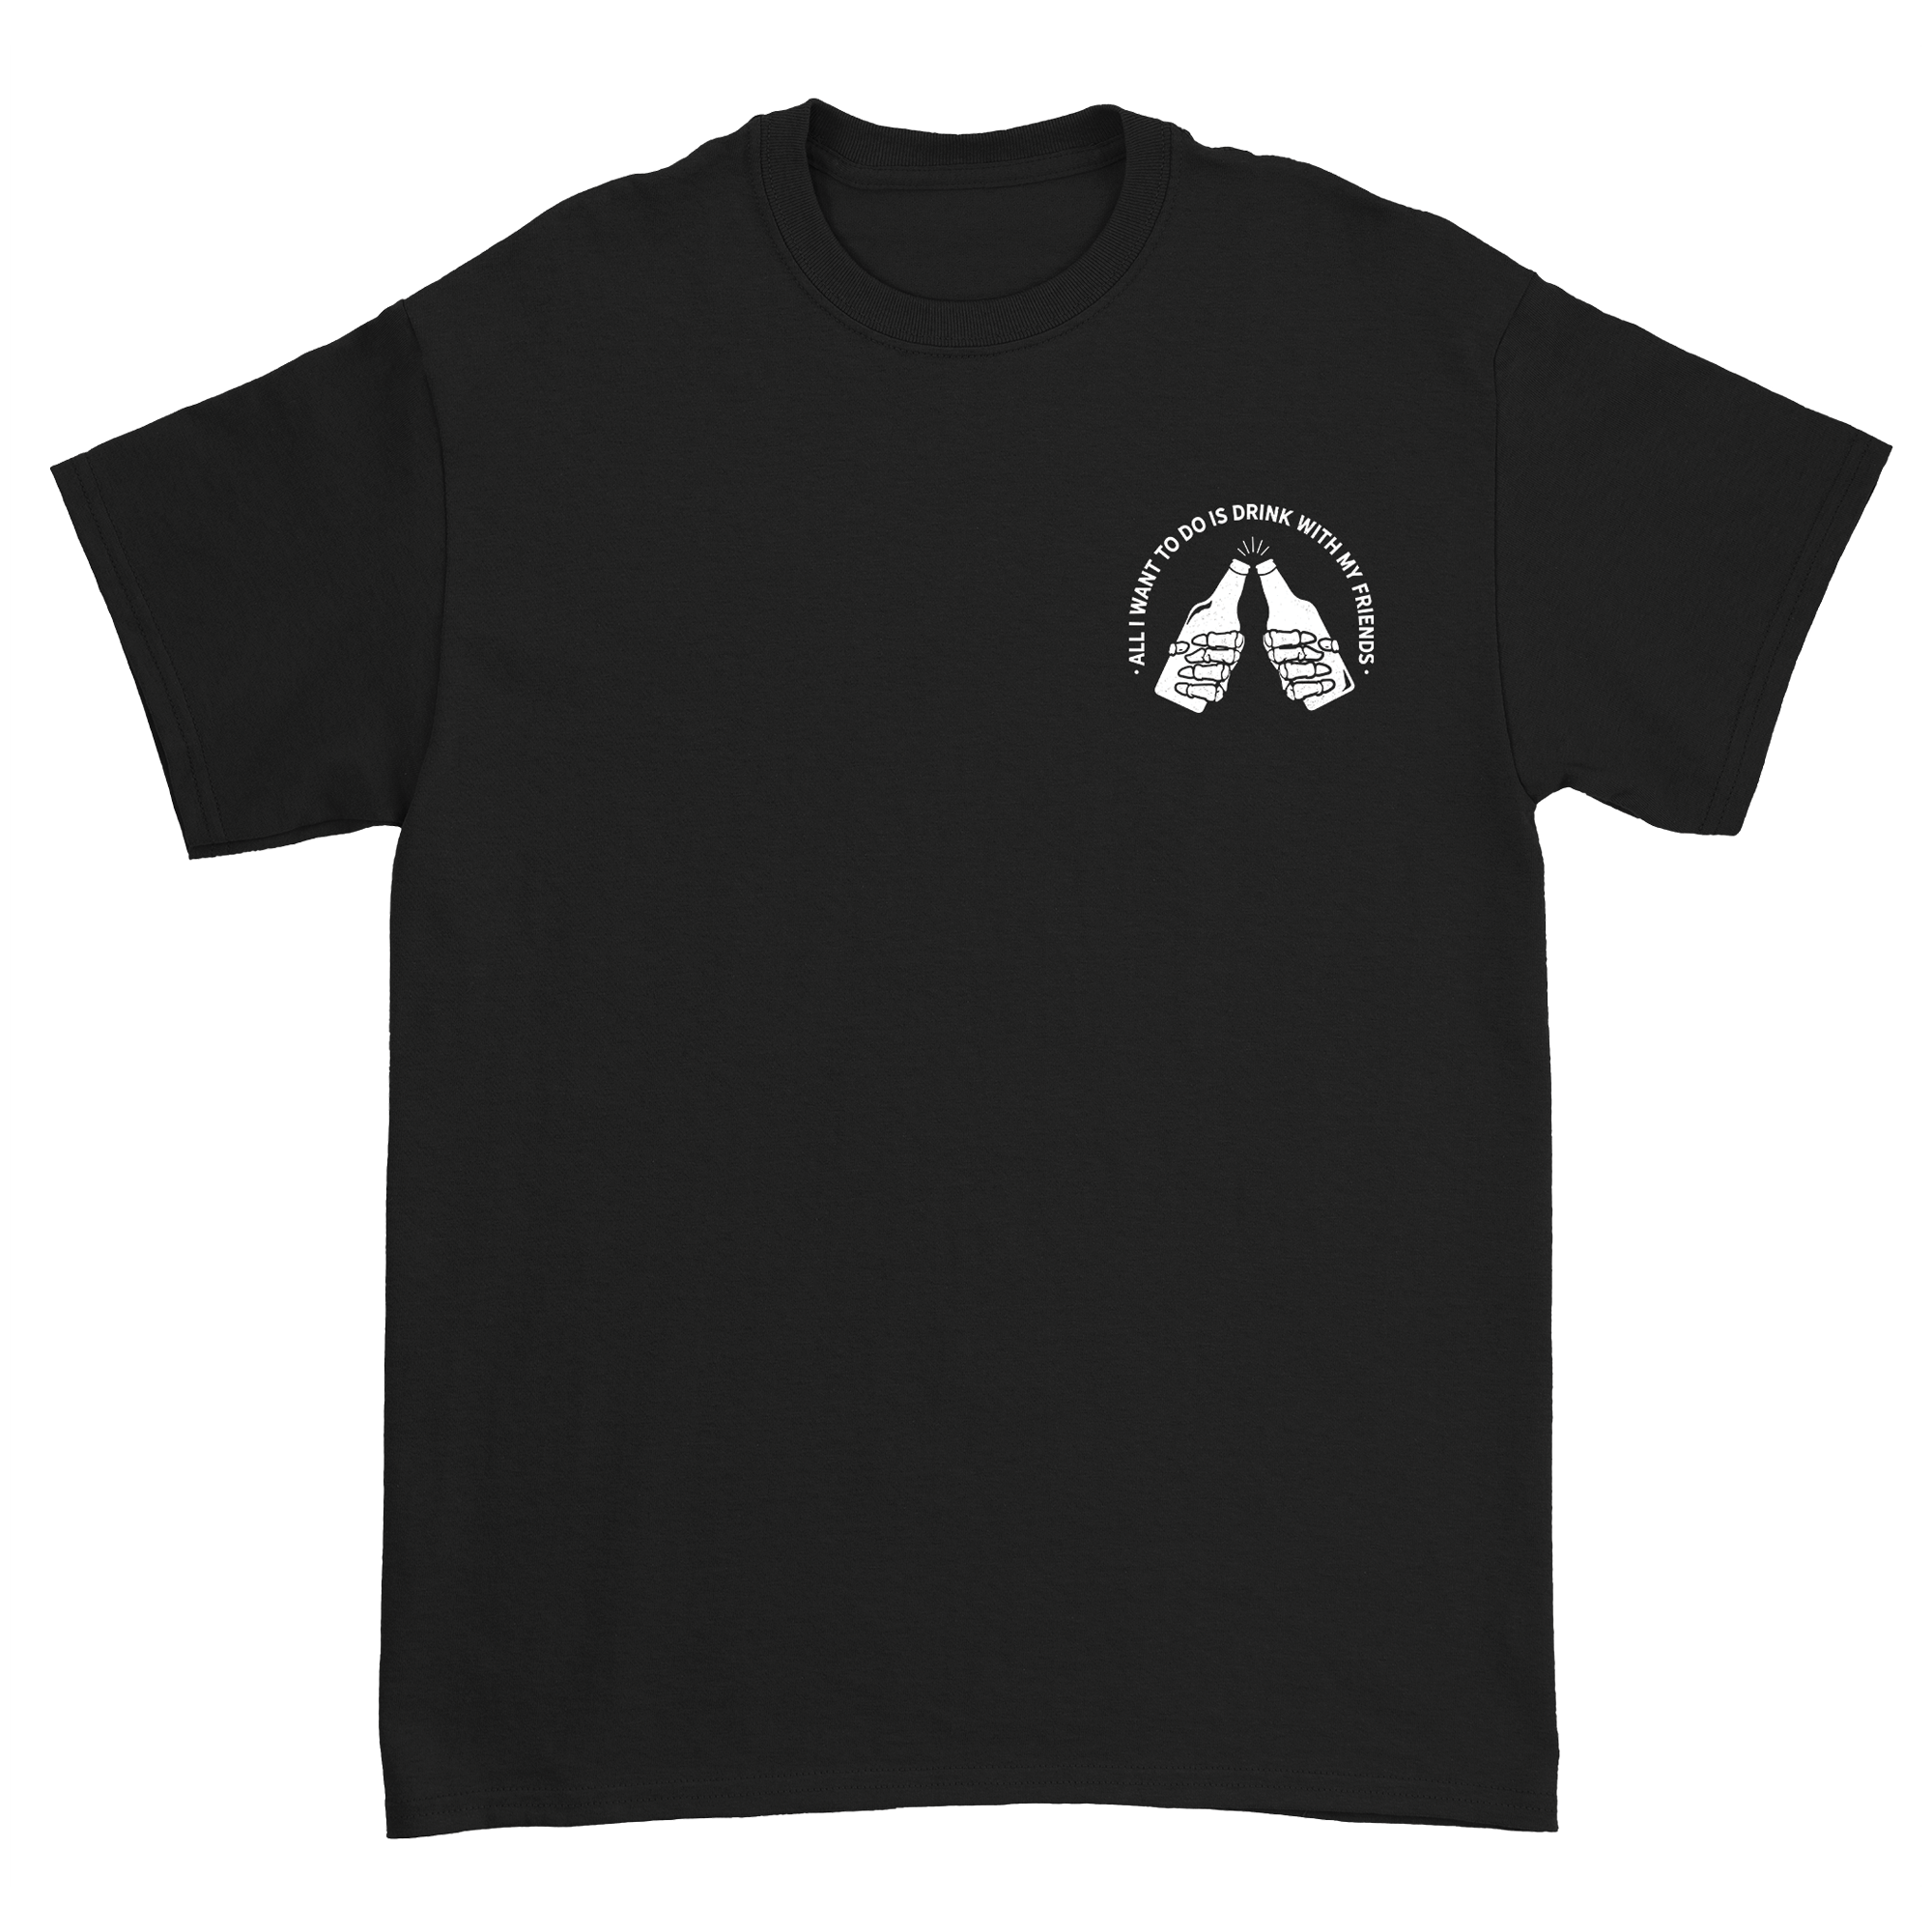 Lakeview - Skeleton Hands Black T-Shirt